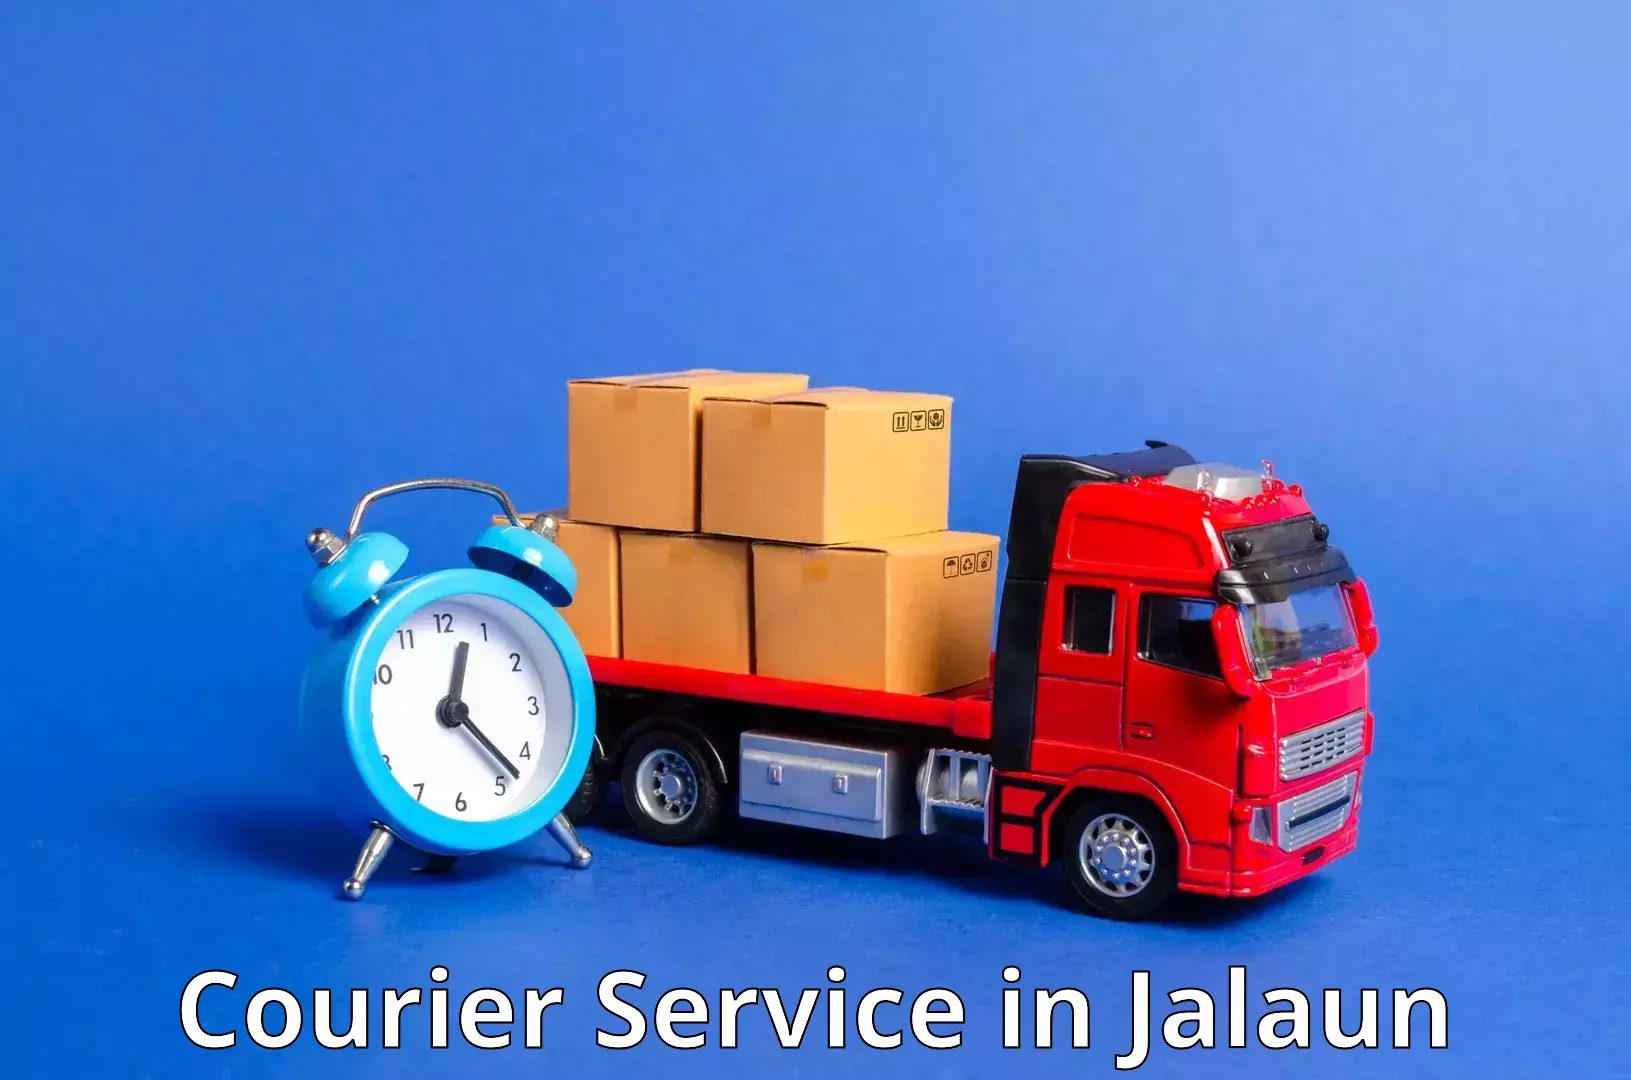 Efficient cargo handling in Jalaun